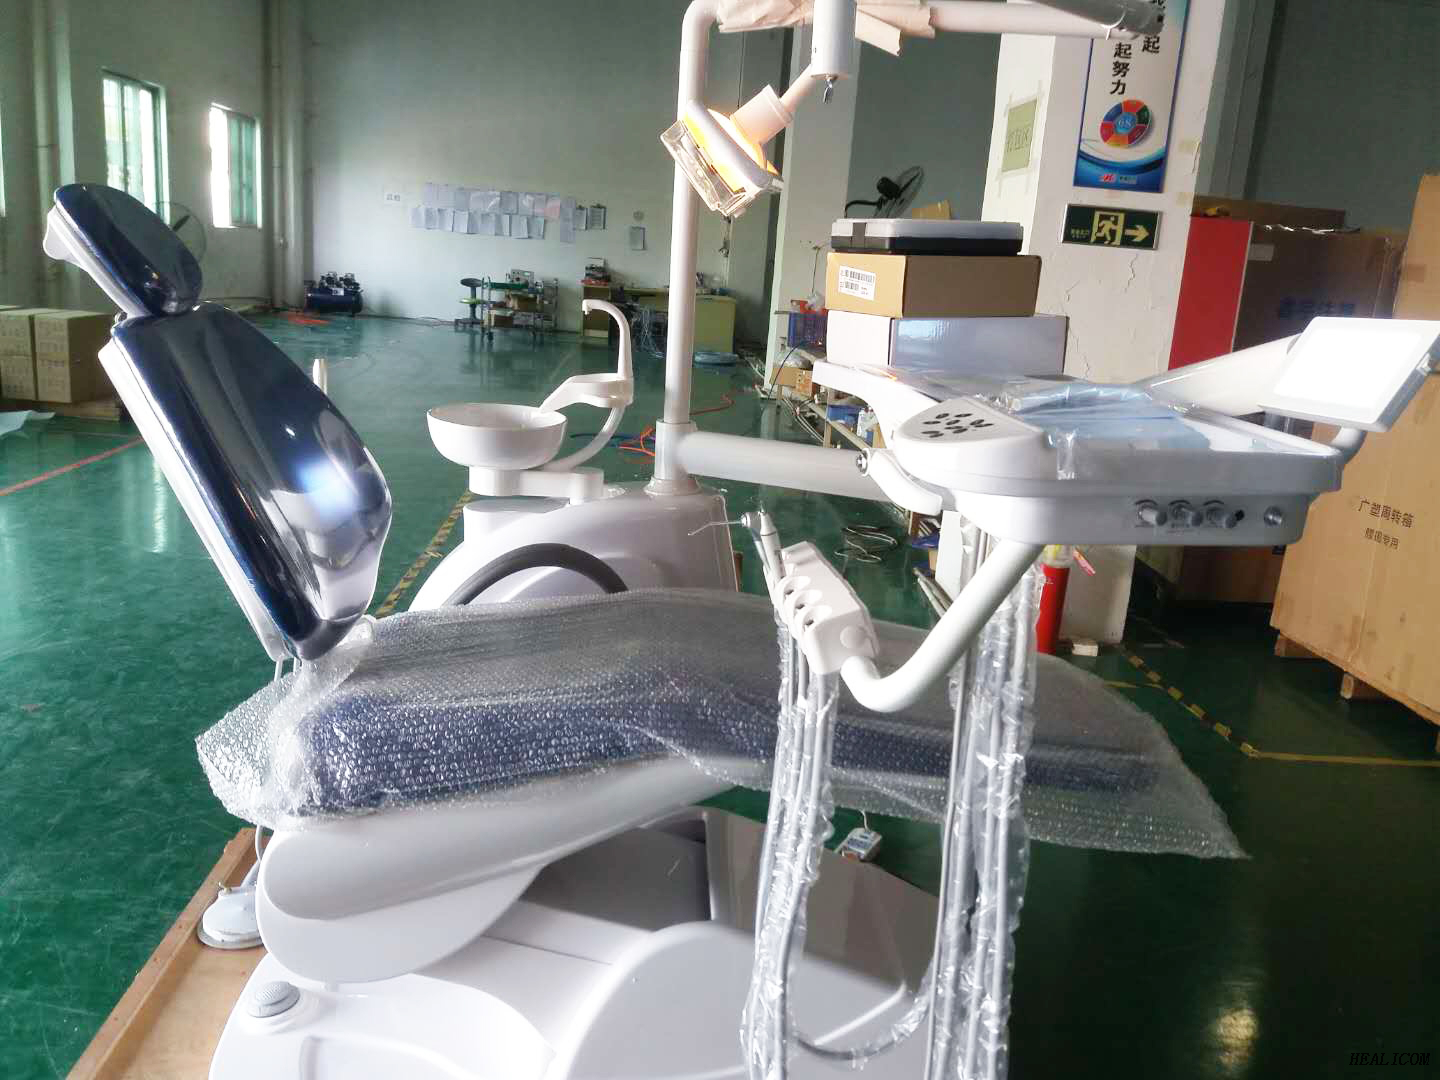 Sedia odontoiatrica medica di alta qualità HDC-M7 di alta qualità per l'ospedale odontoiatrico